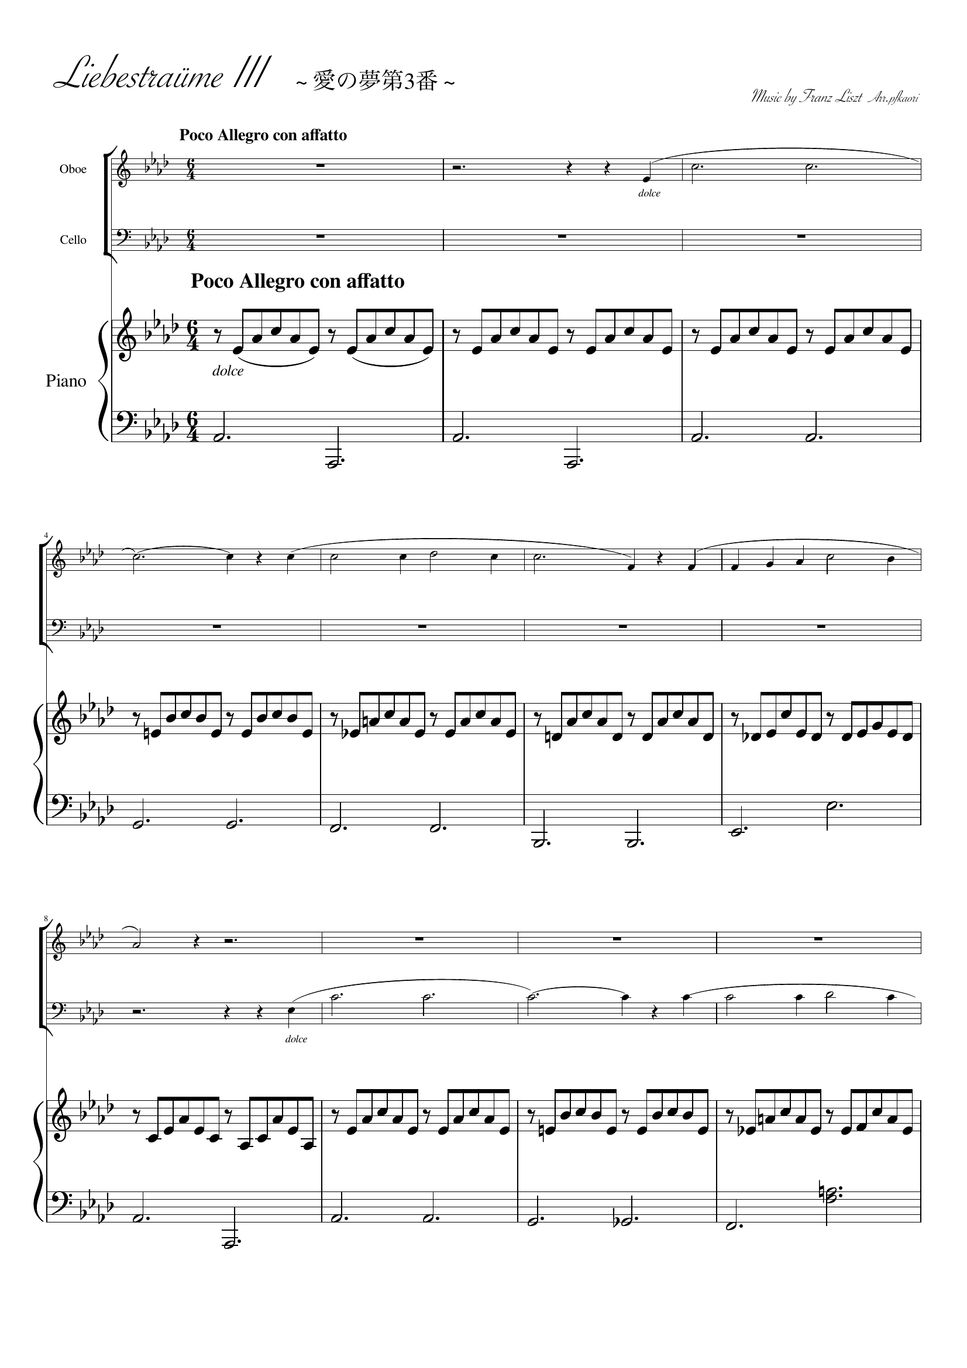 Franz Liszt - Liebestraum No. 3 (As・Piano trio / Oboe & Cello) by pfkaori